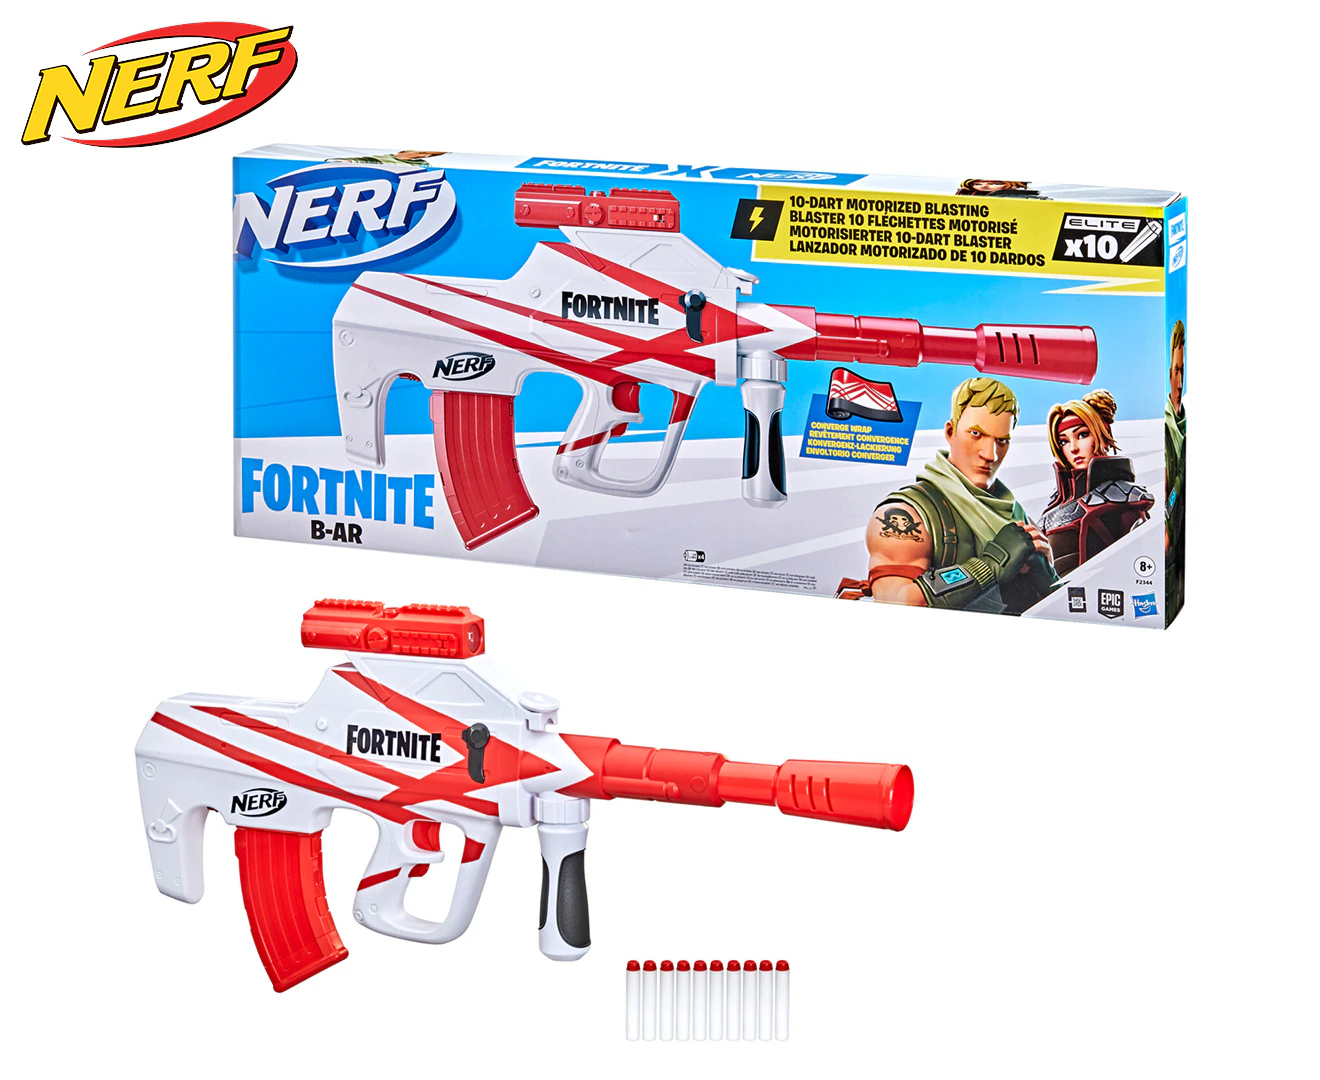 NERF Fortnite Flare Blaster Toy